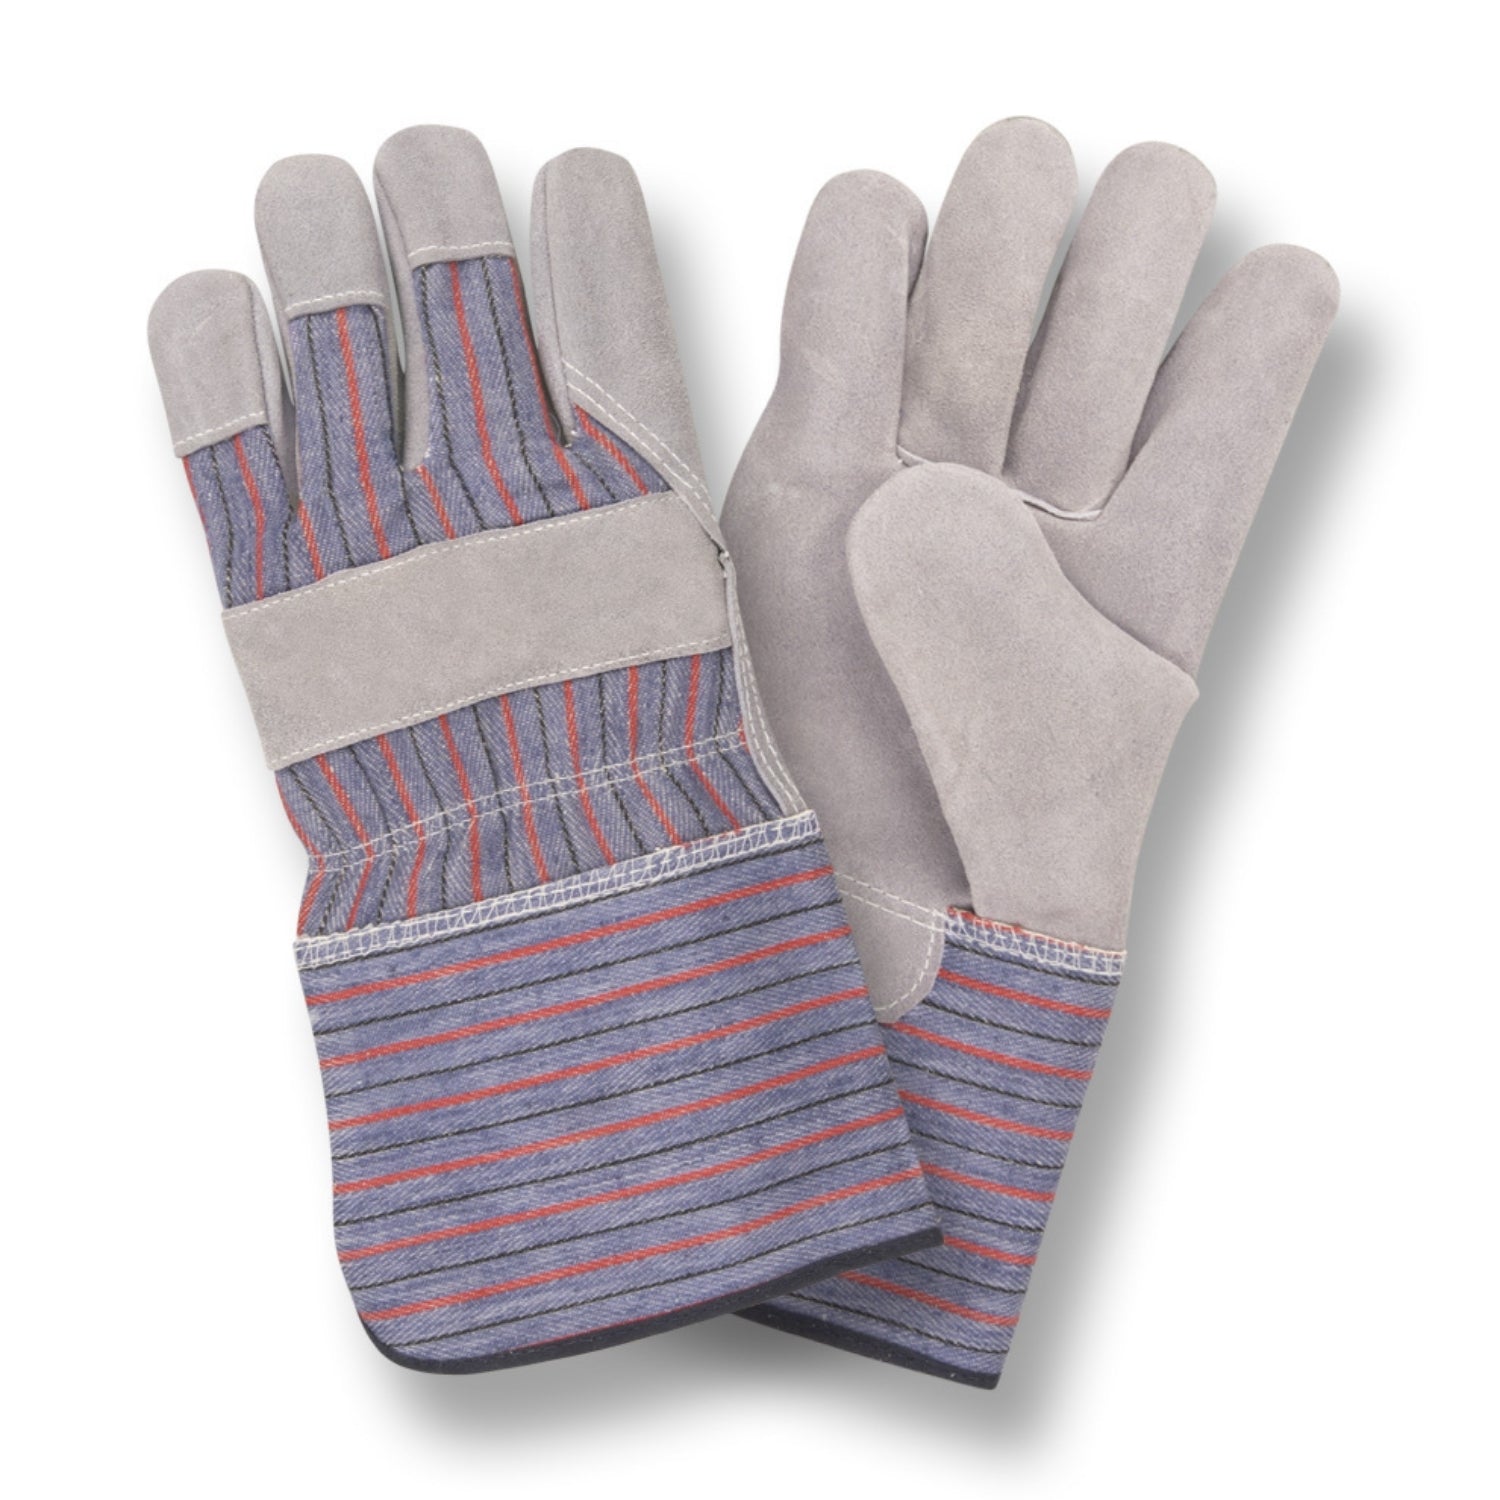 CORDOVA 7240- Work Glove Leather Palm, Canvas Back, Gauntlet Cuff 12 Pack